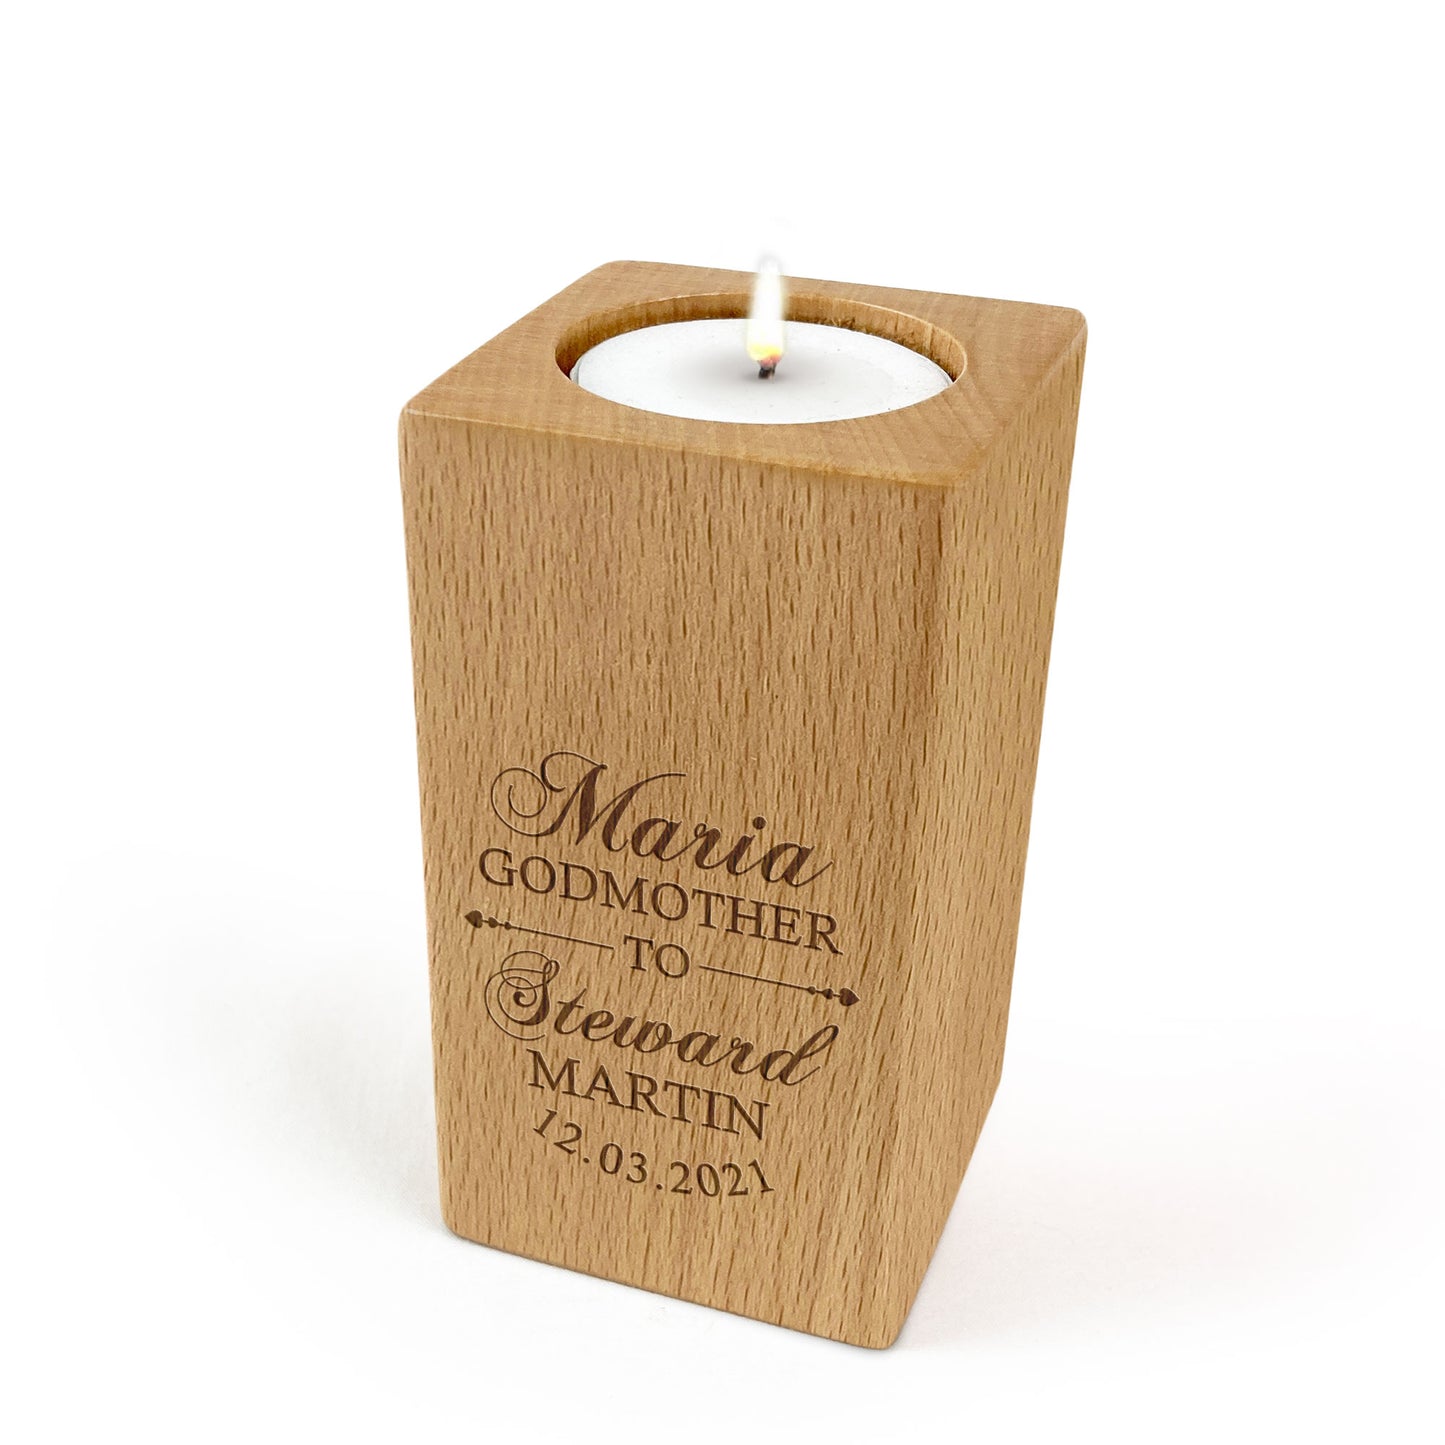 Wooden Tealight Candle Holder for Godparents Baptism Gift